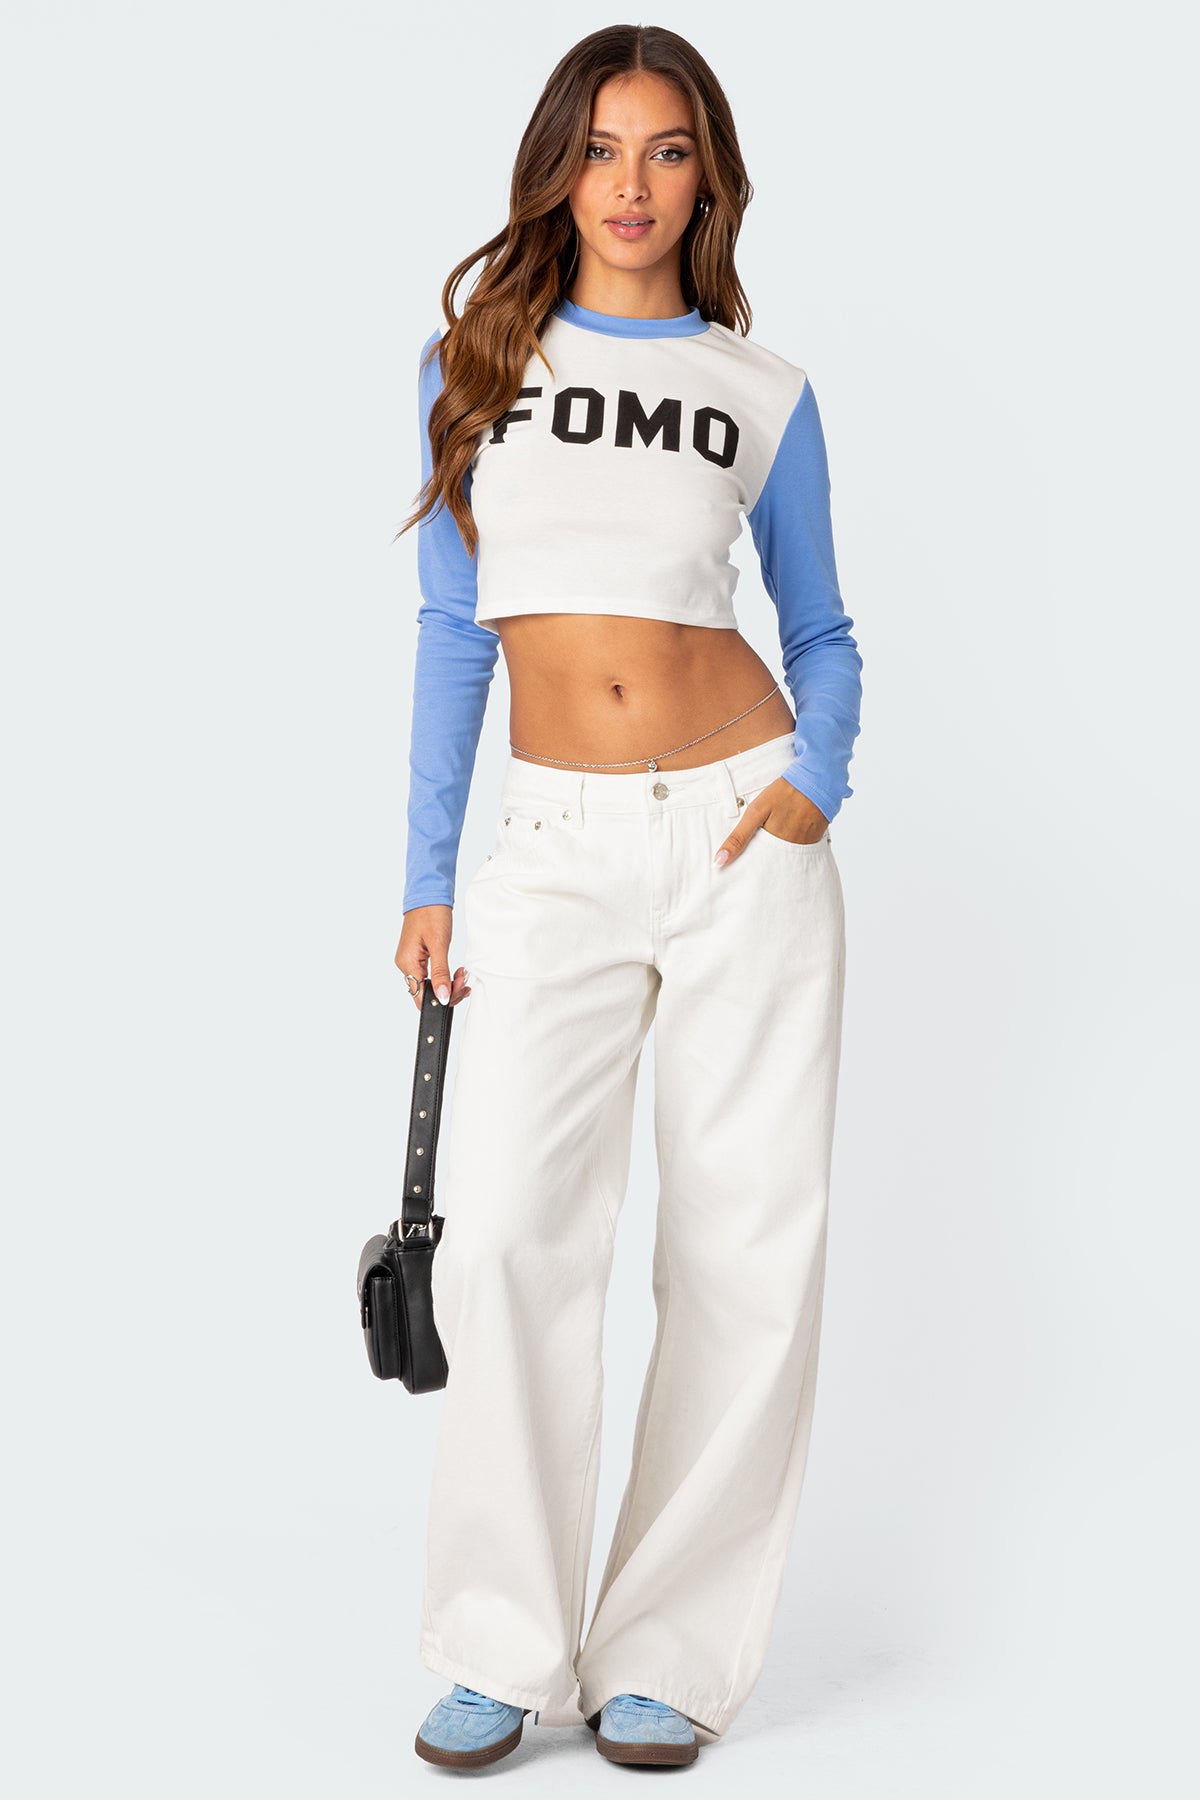 Fomo Long Sleeved T-Shirt